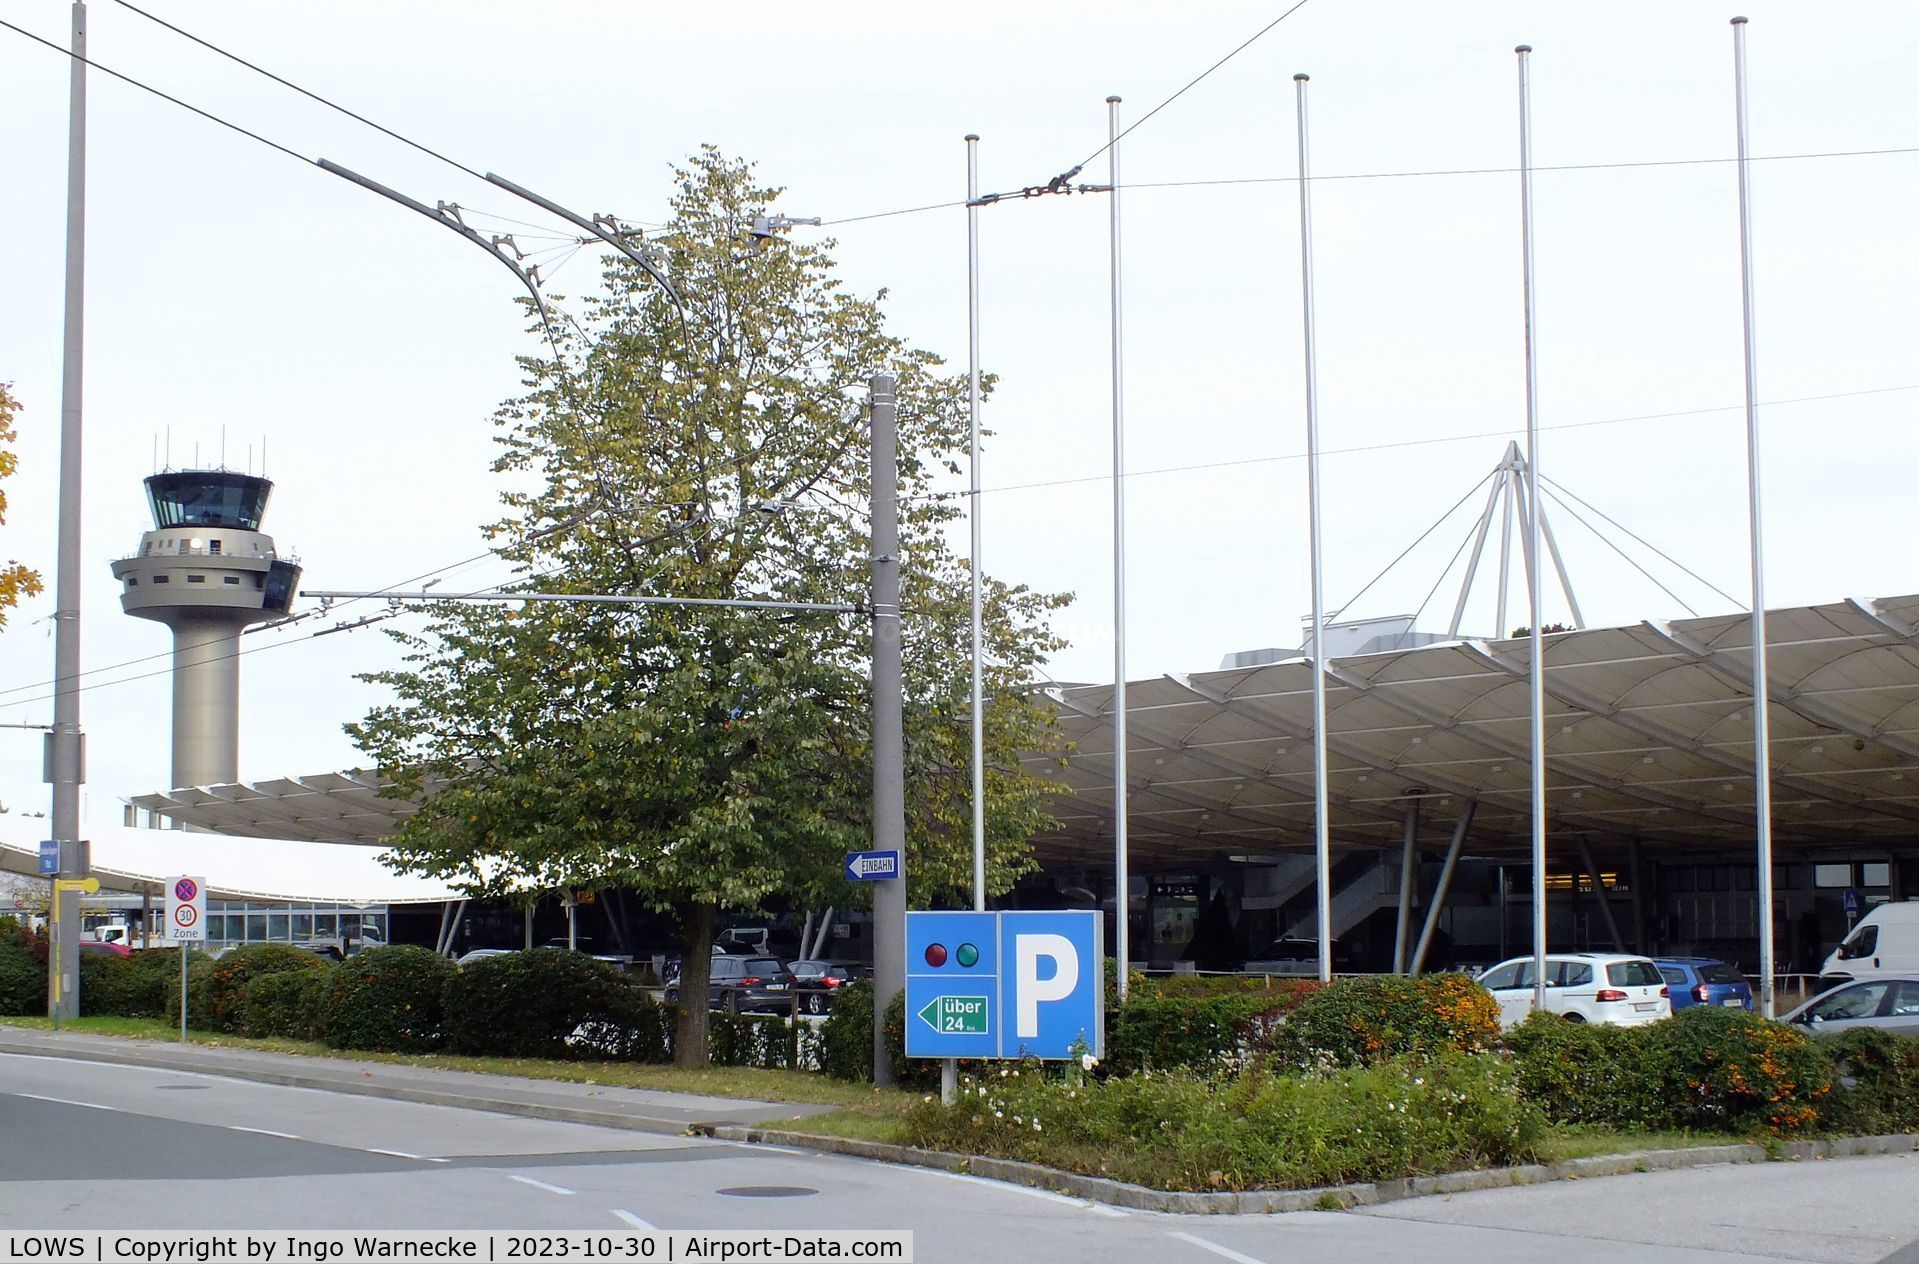 Salzburg Airport, Salzburg Austria (LOWS) - landside view of tower and terminal at Salzburg airport